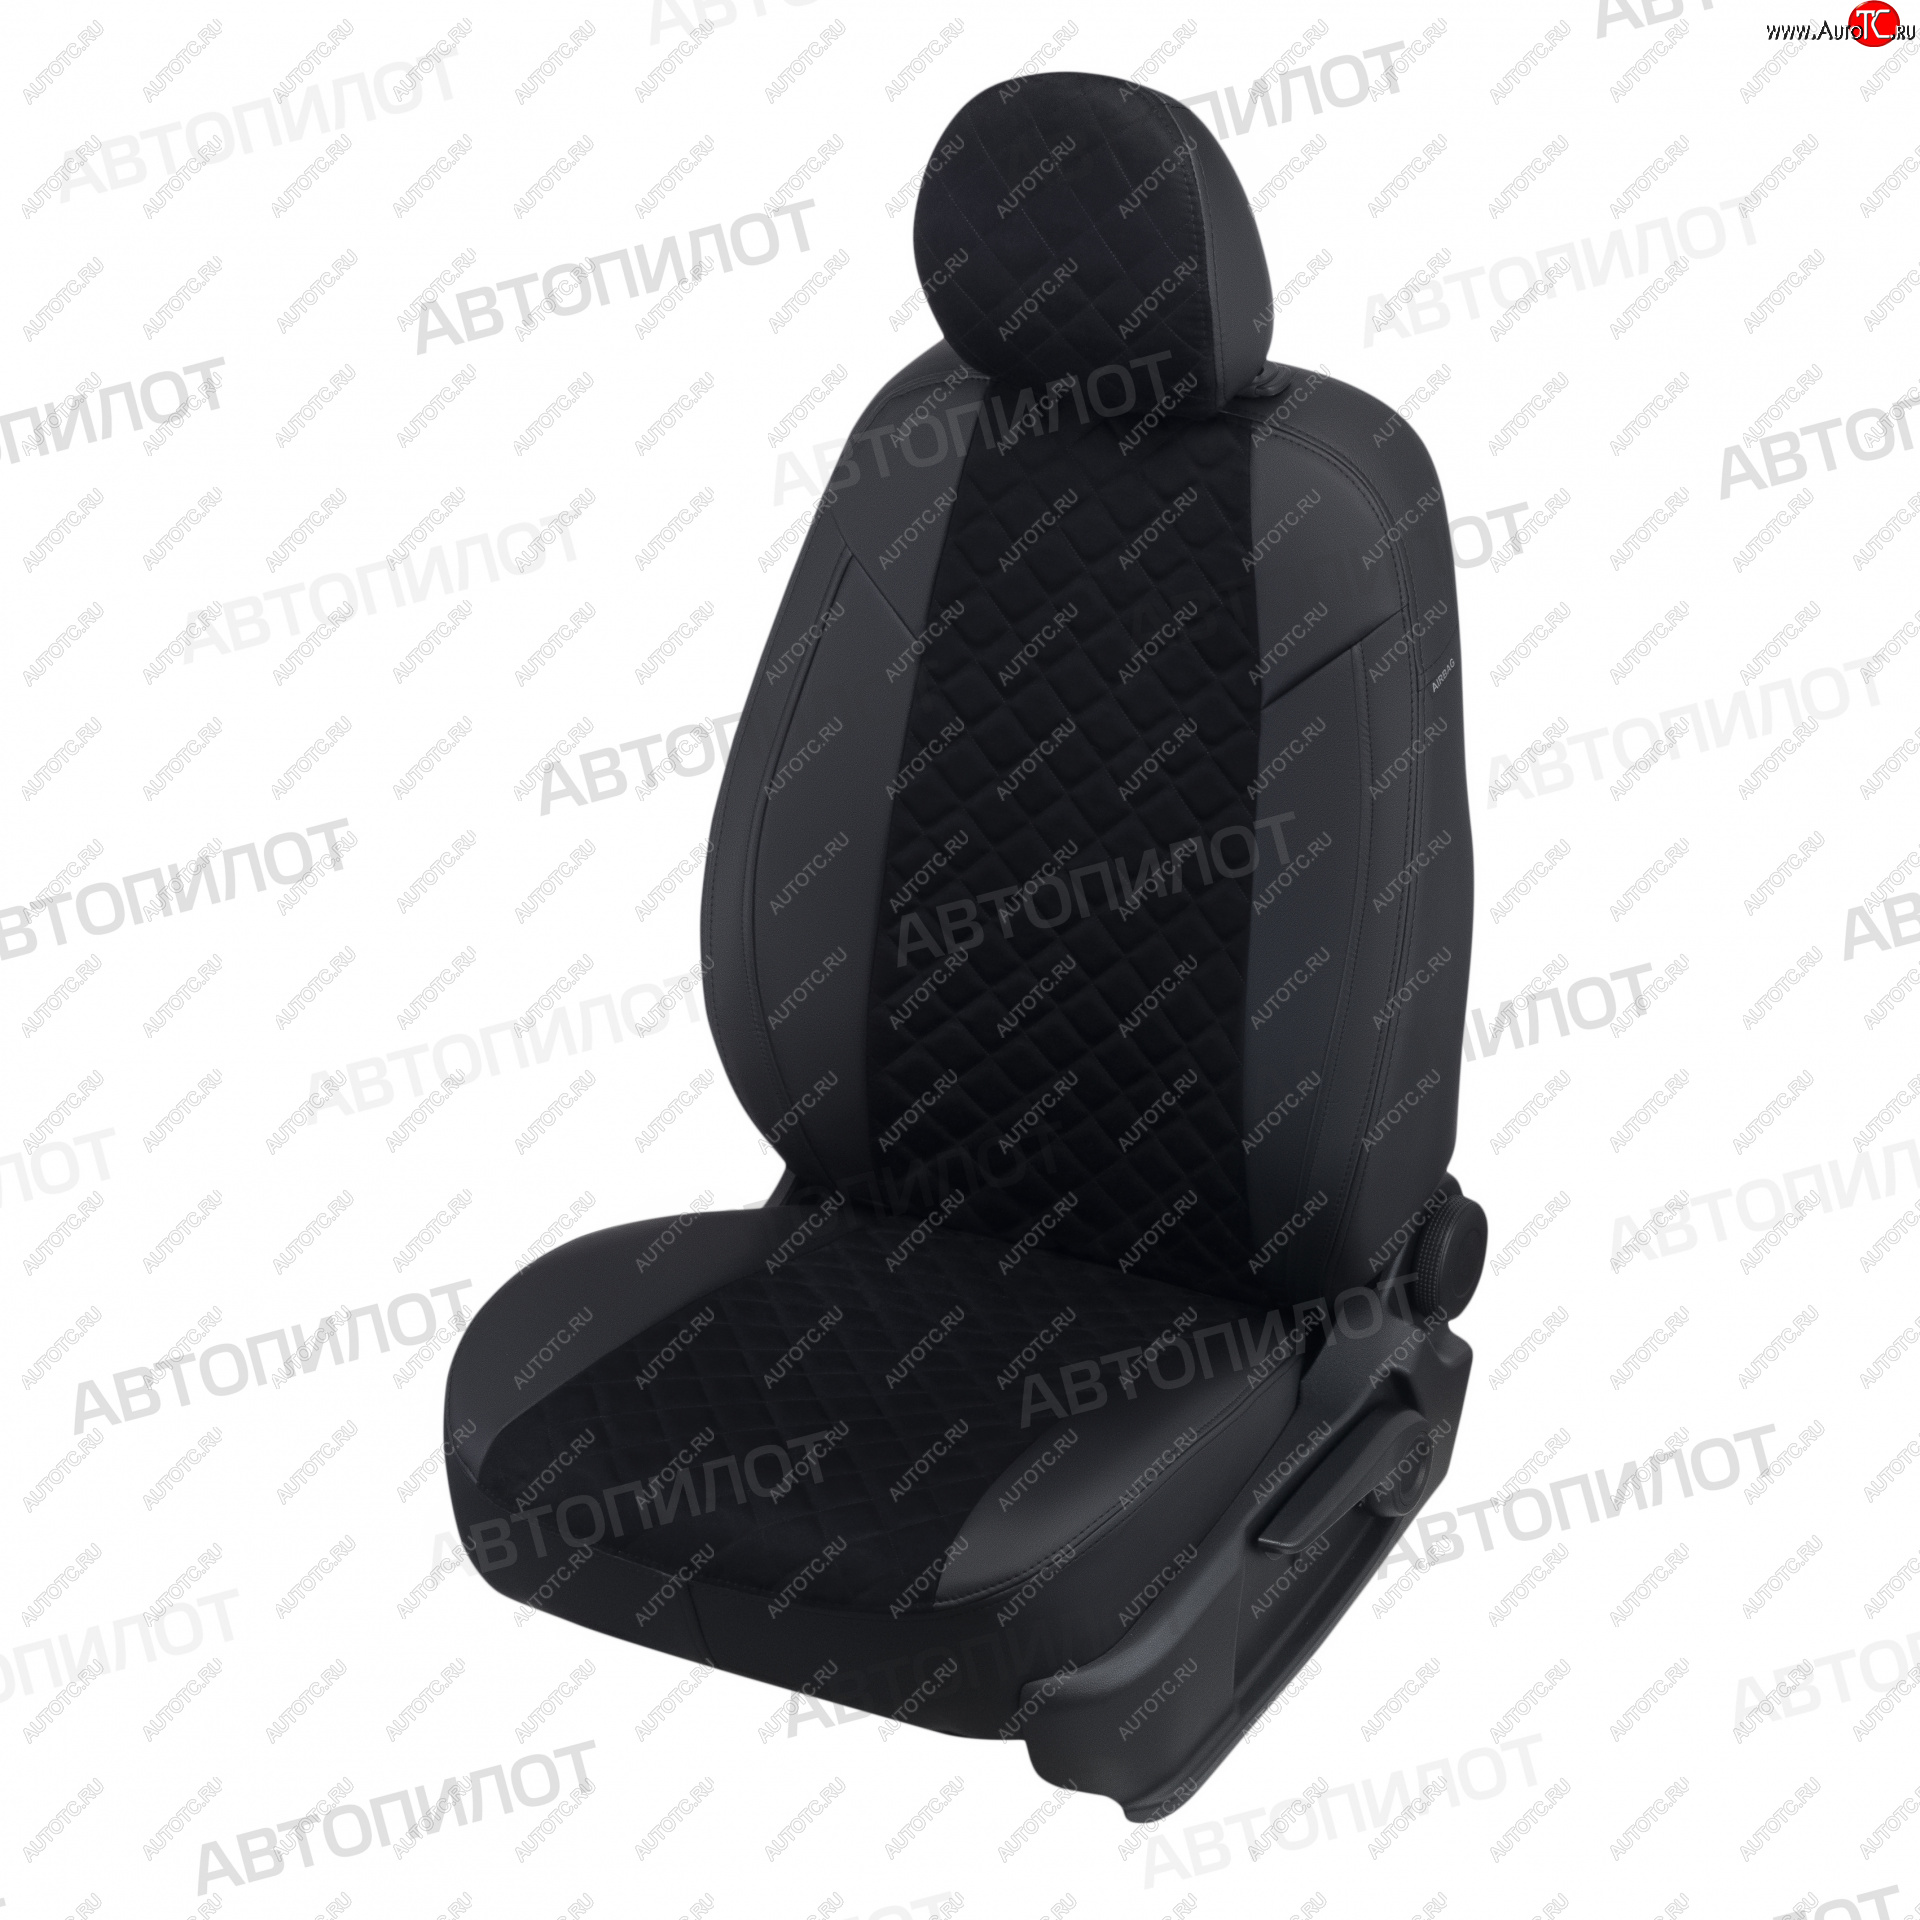 7 799 р. Чехлы сидений (экокожа) Автопилот Ромб  KIA Rio  2 JB (2005-2011) (черный)